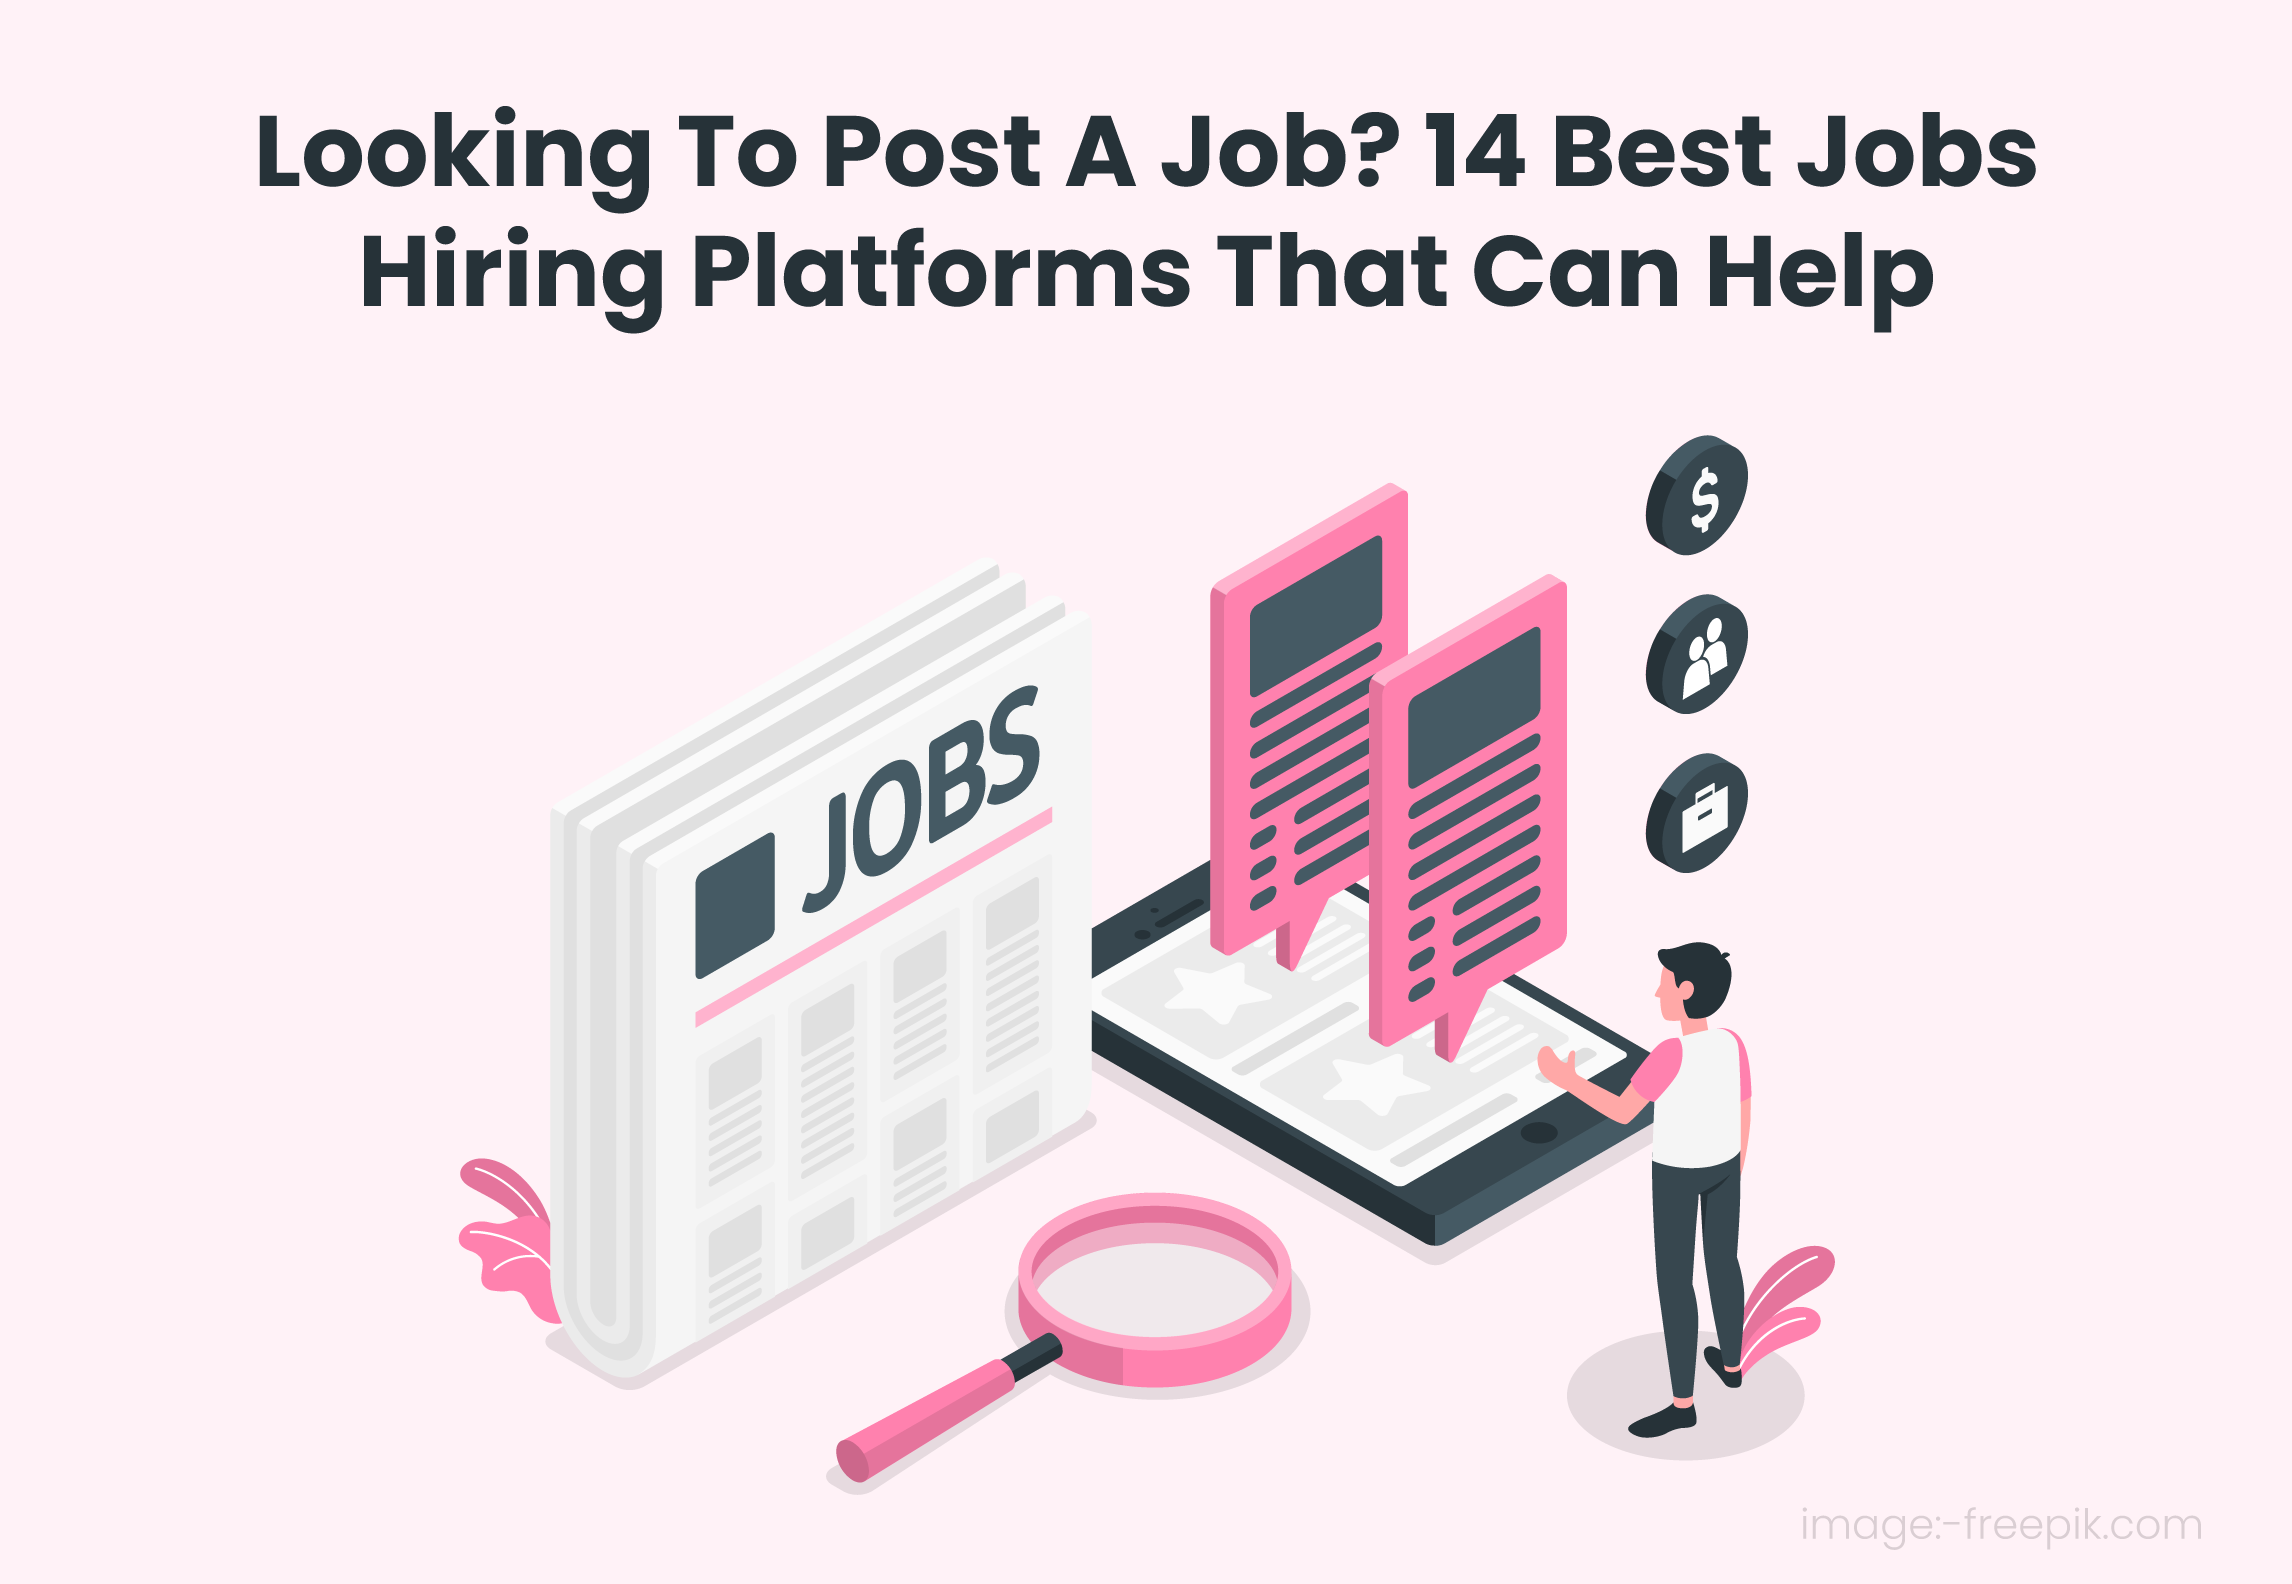 Explore the Top 14 Job Hiring Platforms